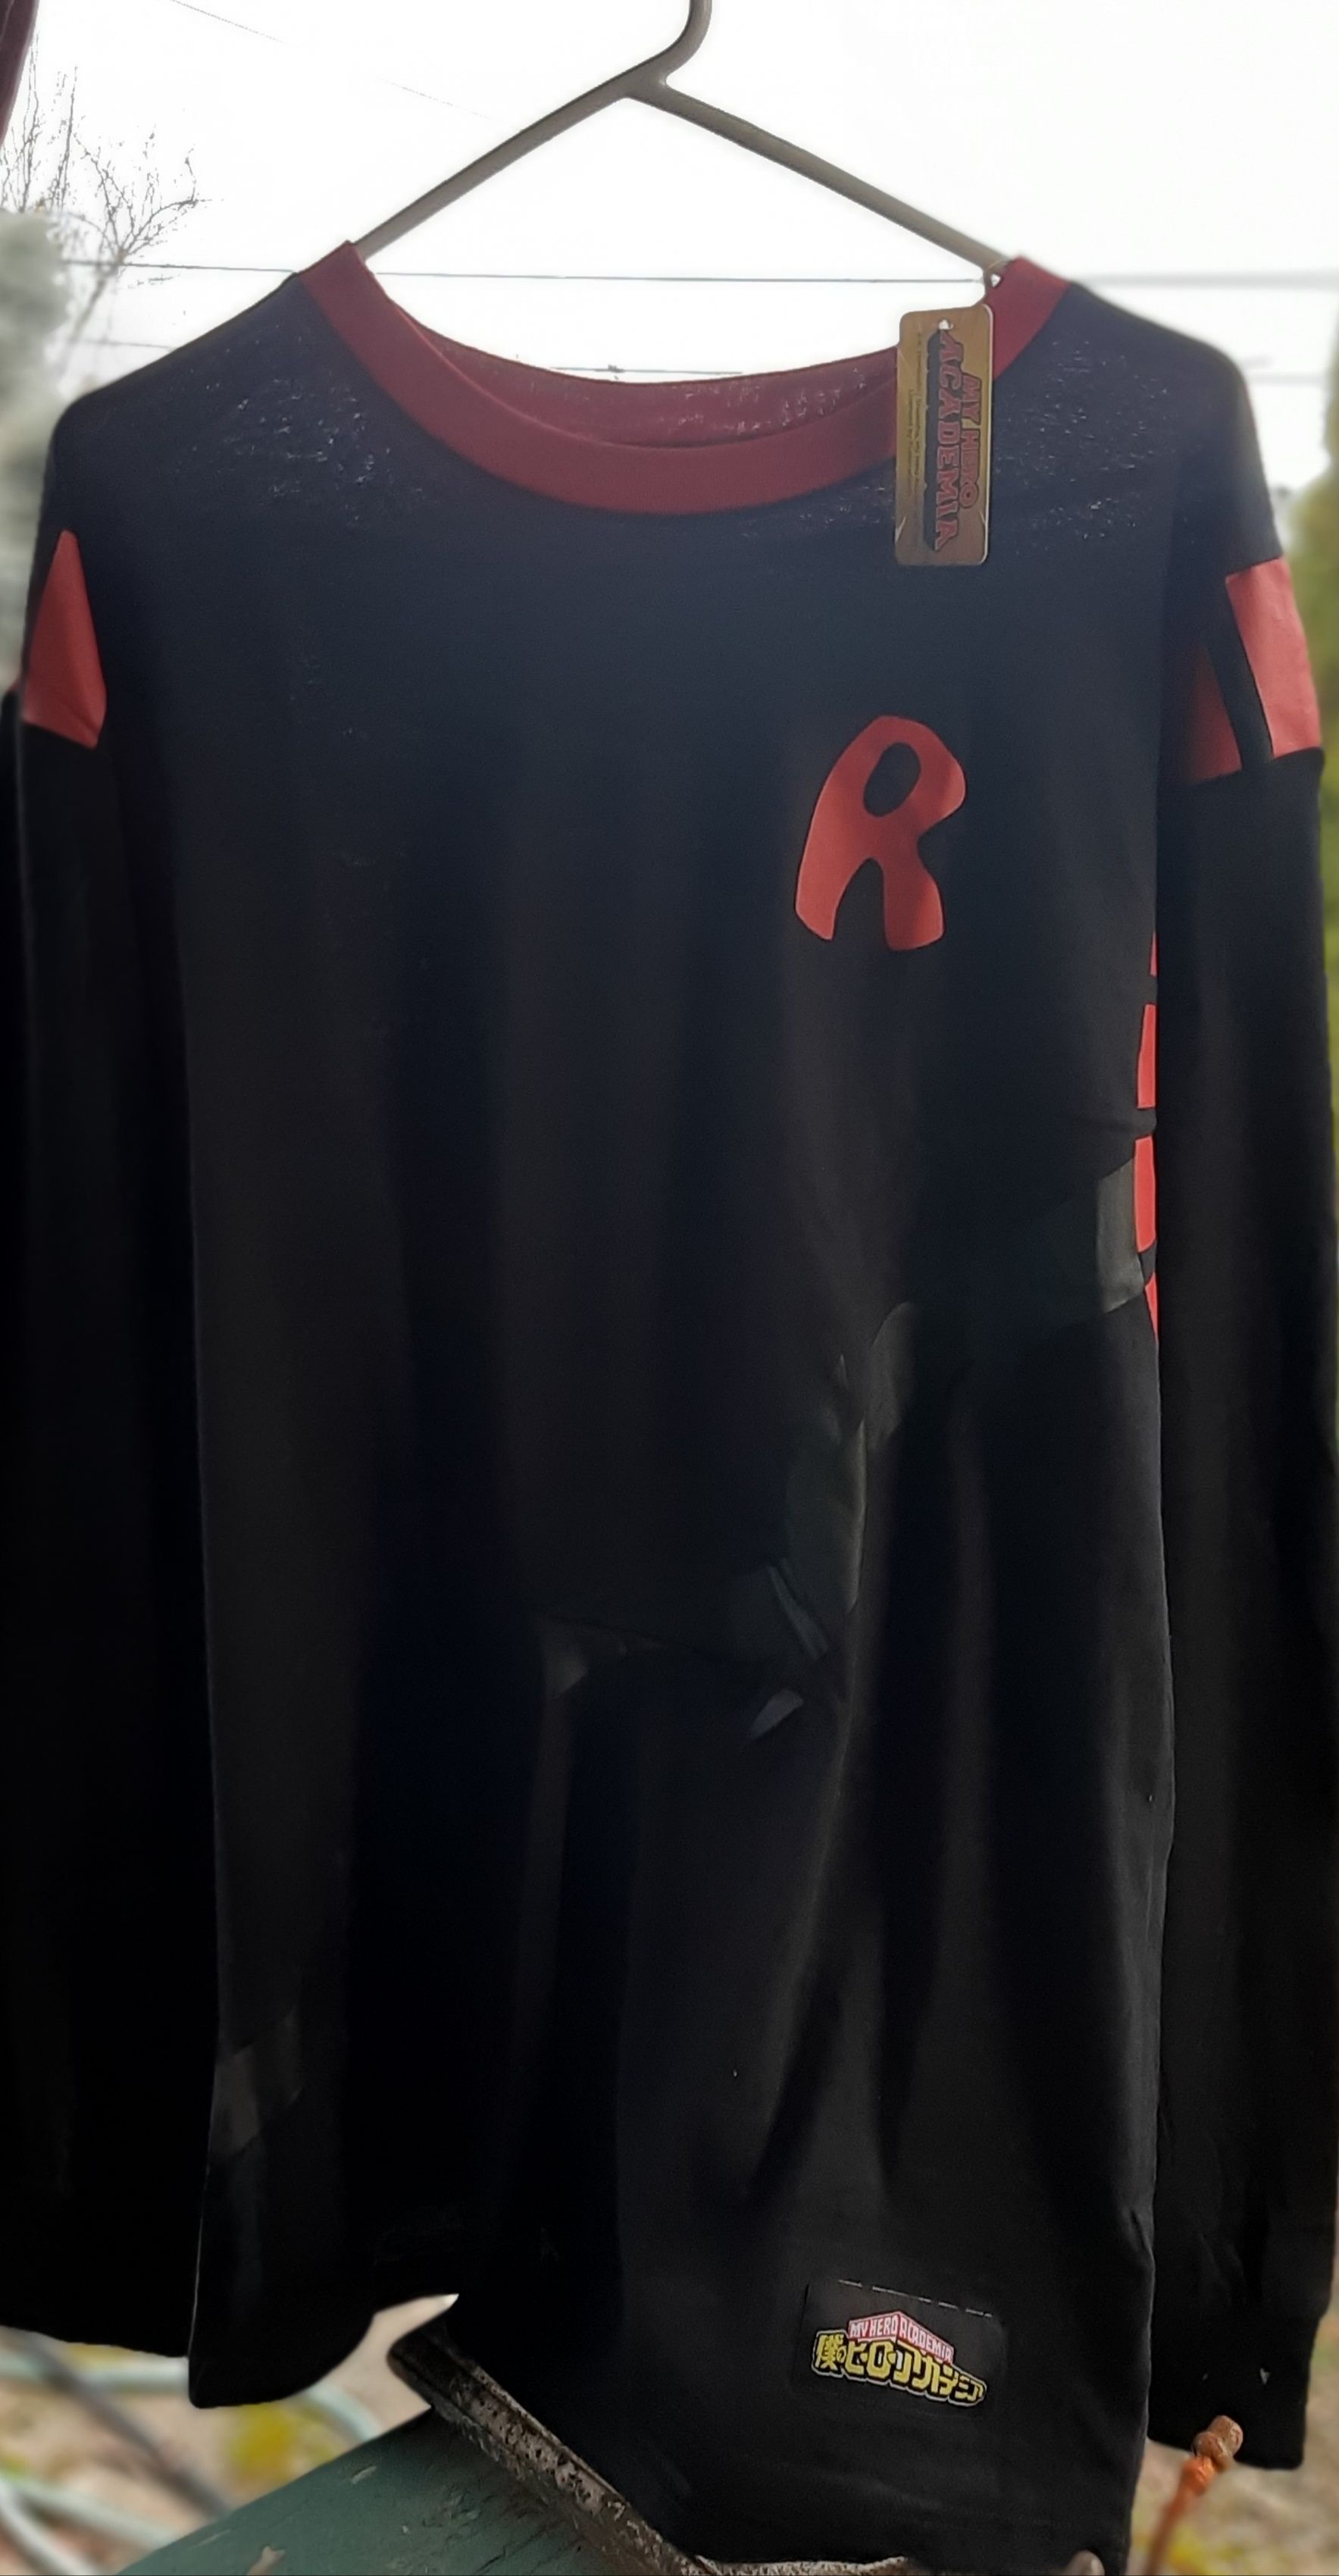 My Hero Academia Red Riot Shirt